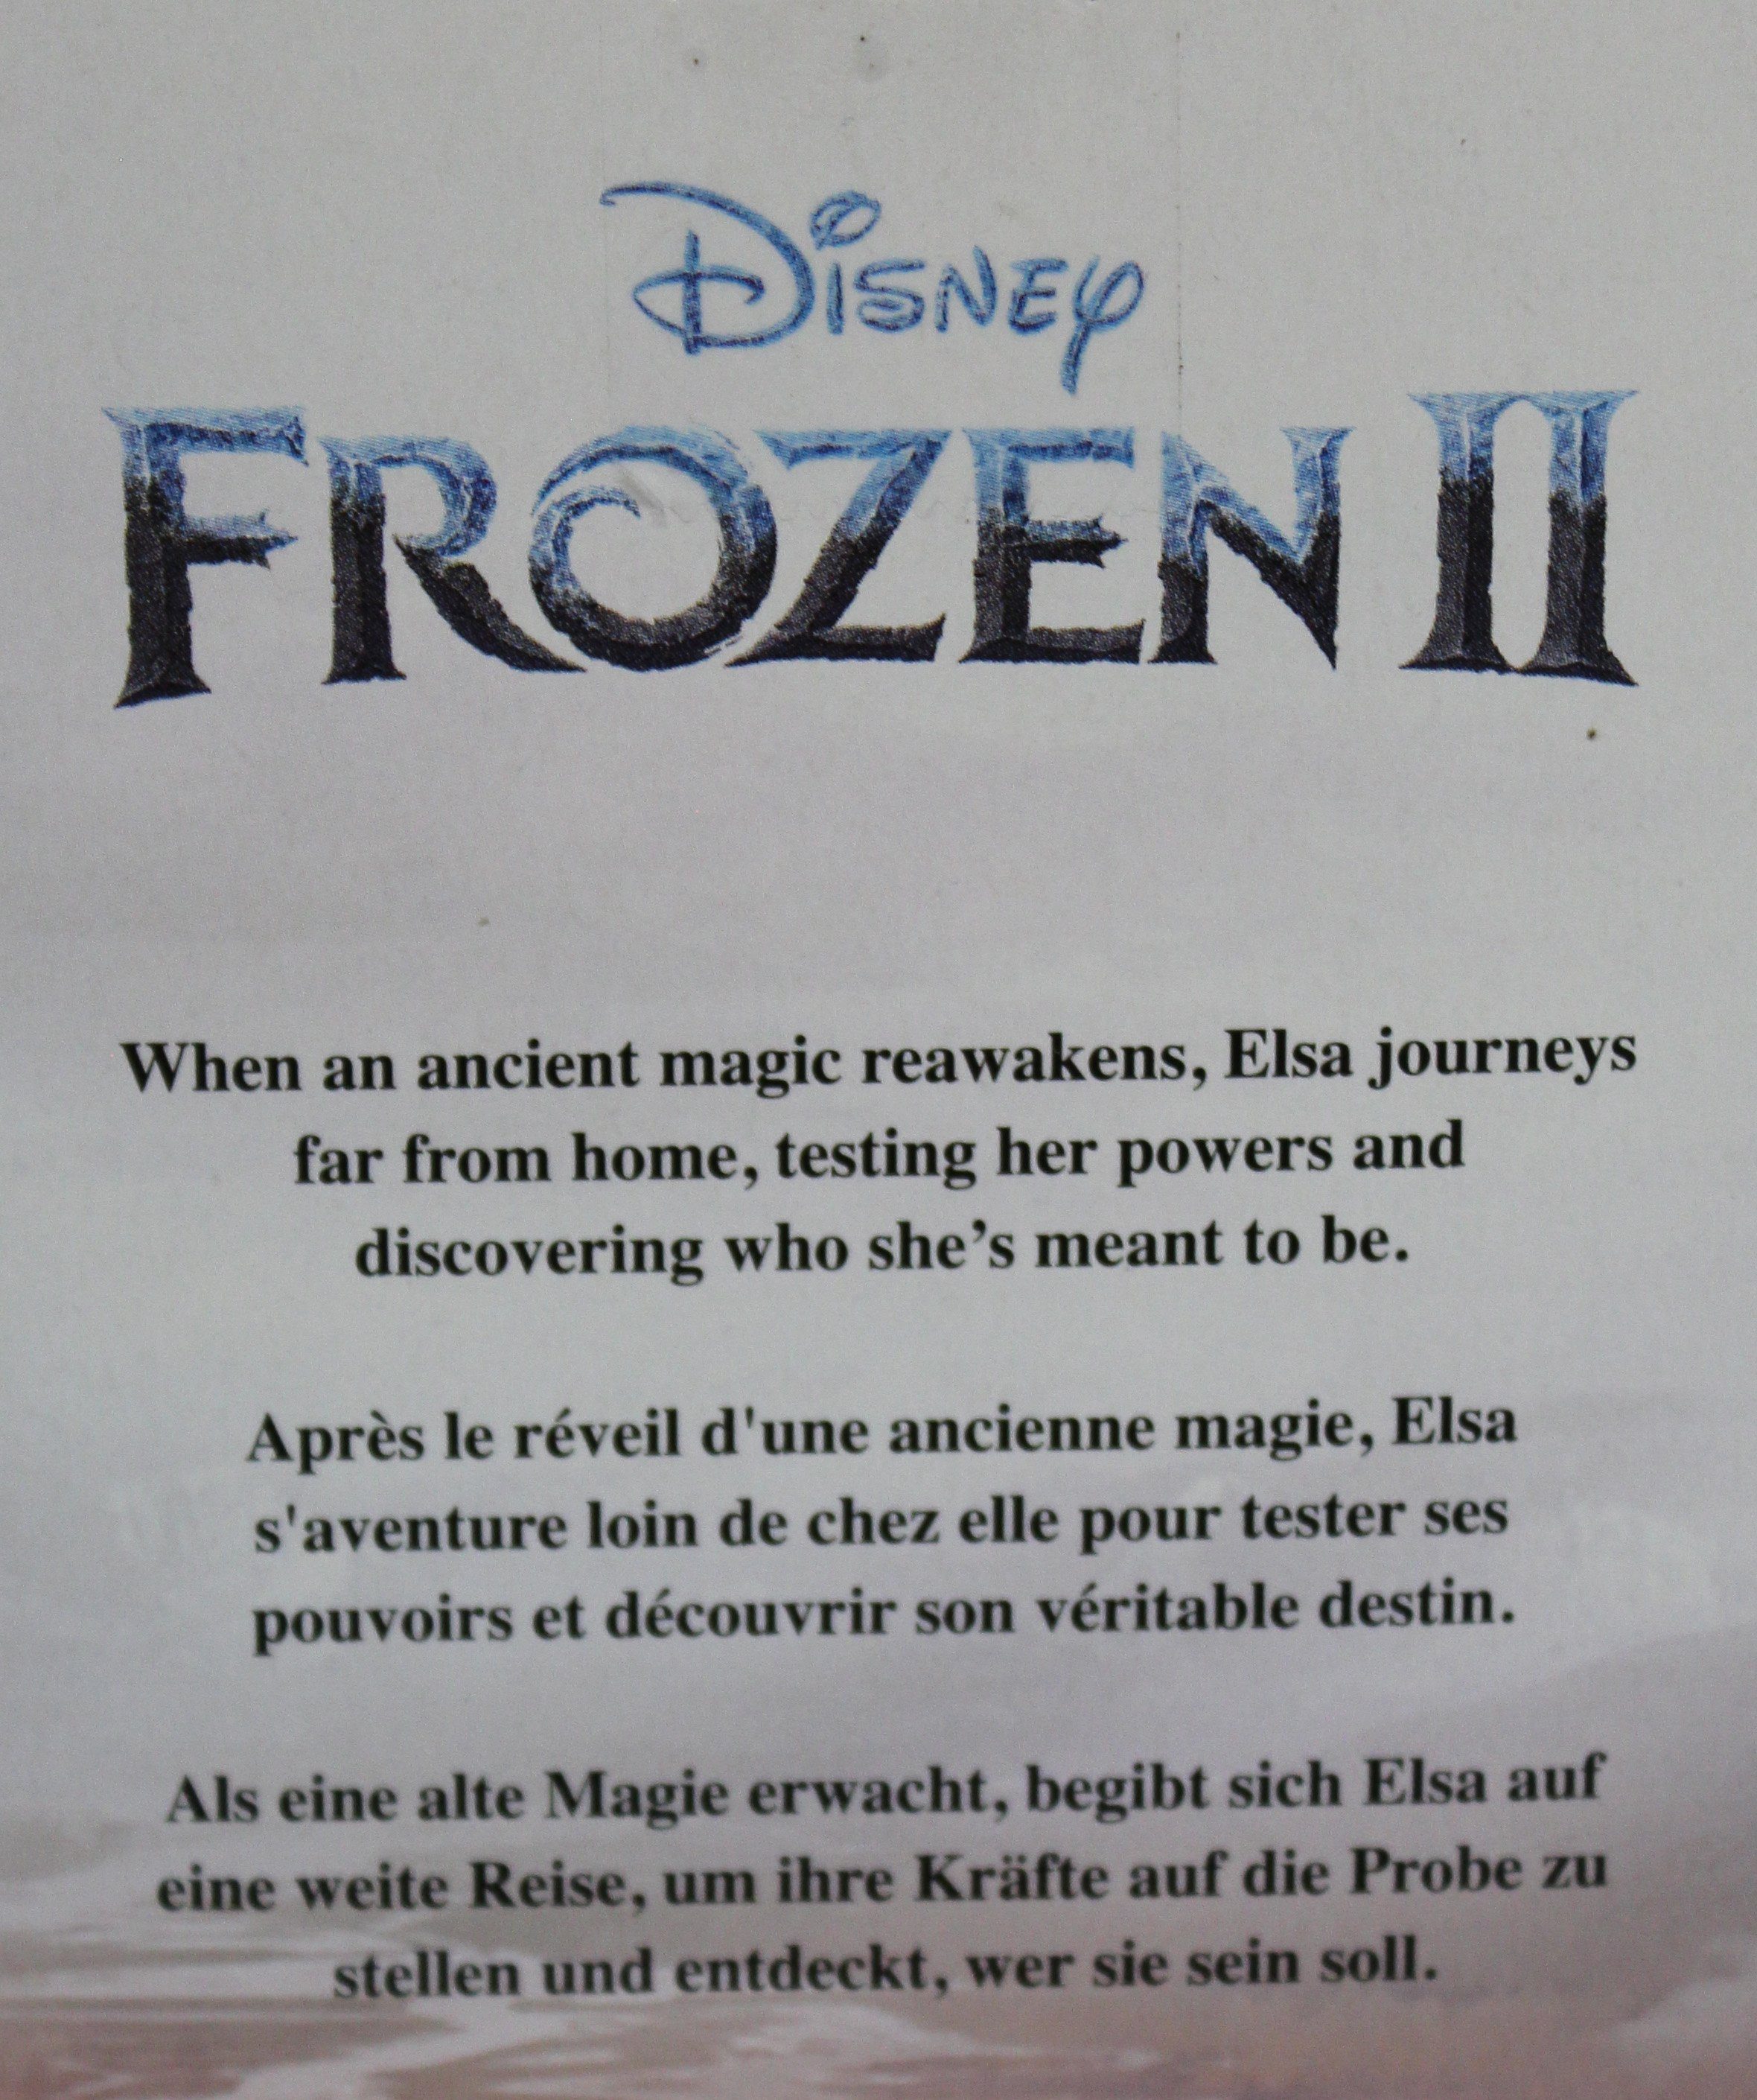 Modepuppe aus Elsa II Disney Anziehpuppe Hasbro Hasbro Frozen